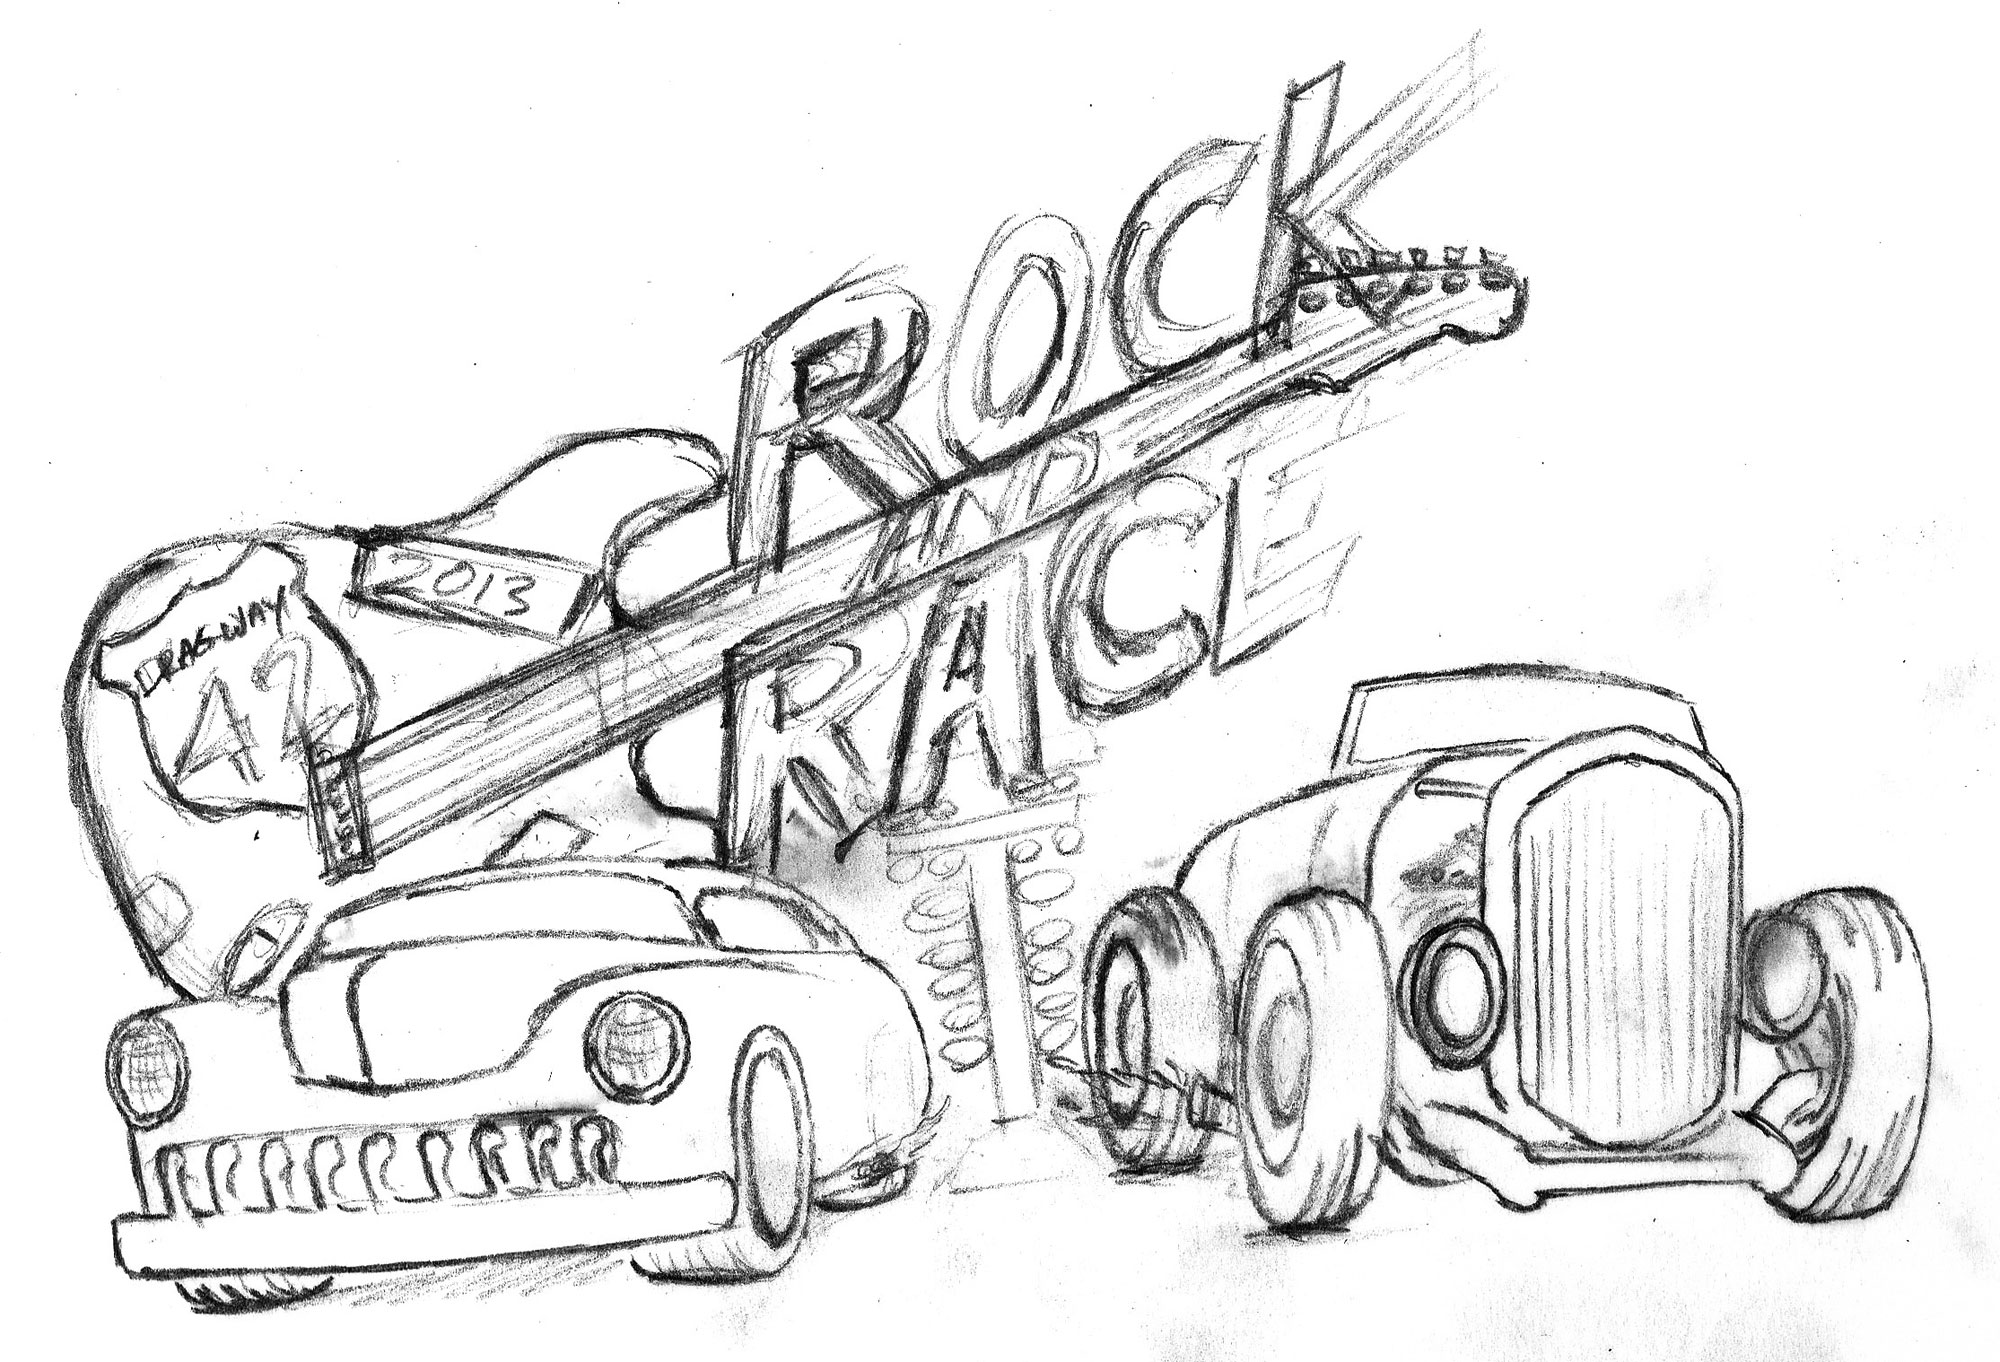 Original Sketch for Dragway 42 Rock and Race logo.